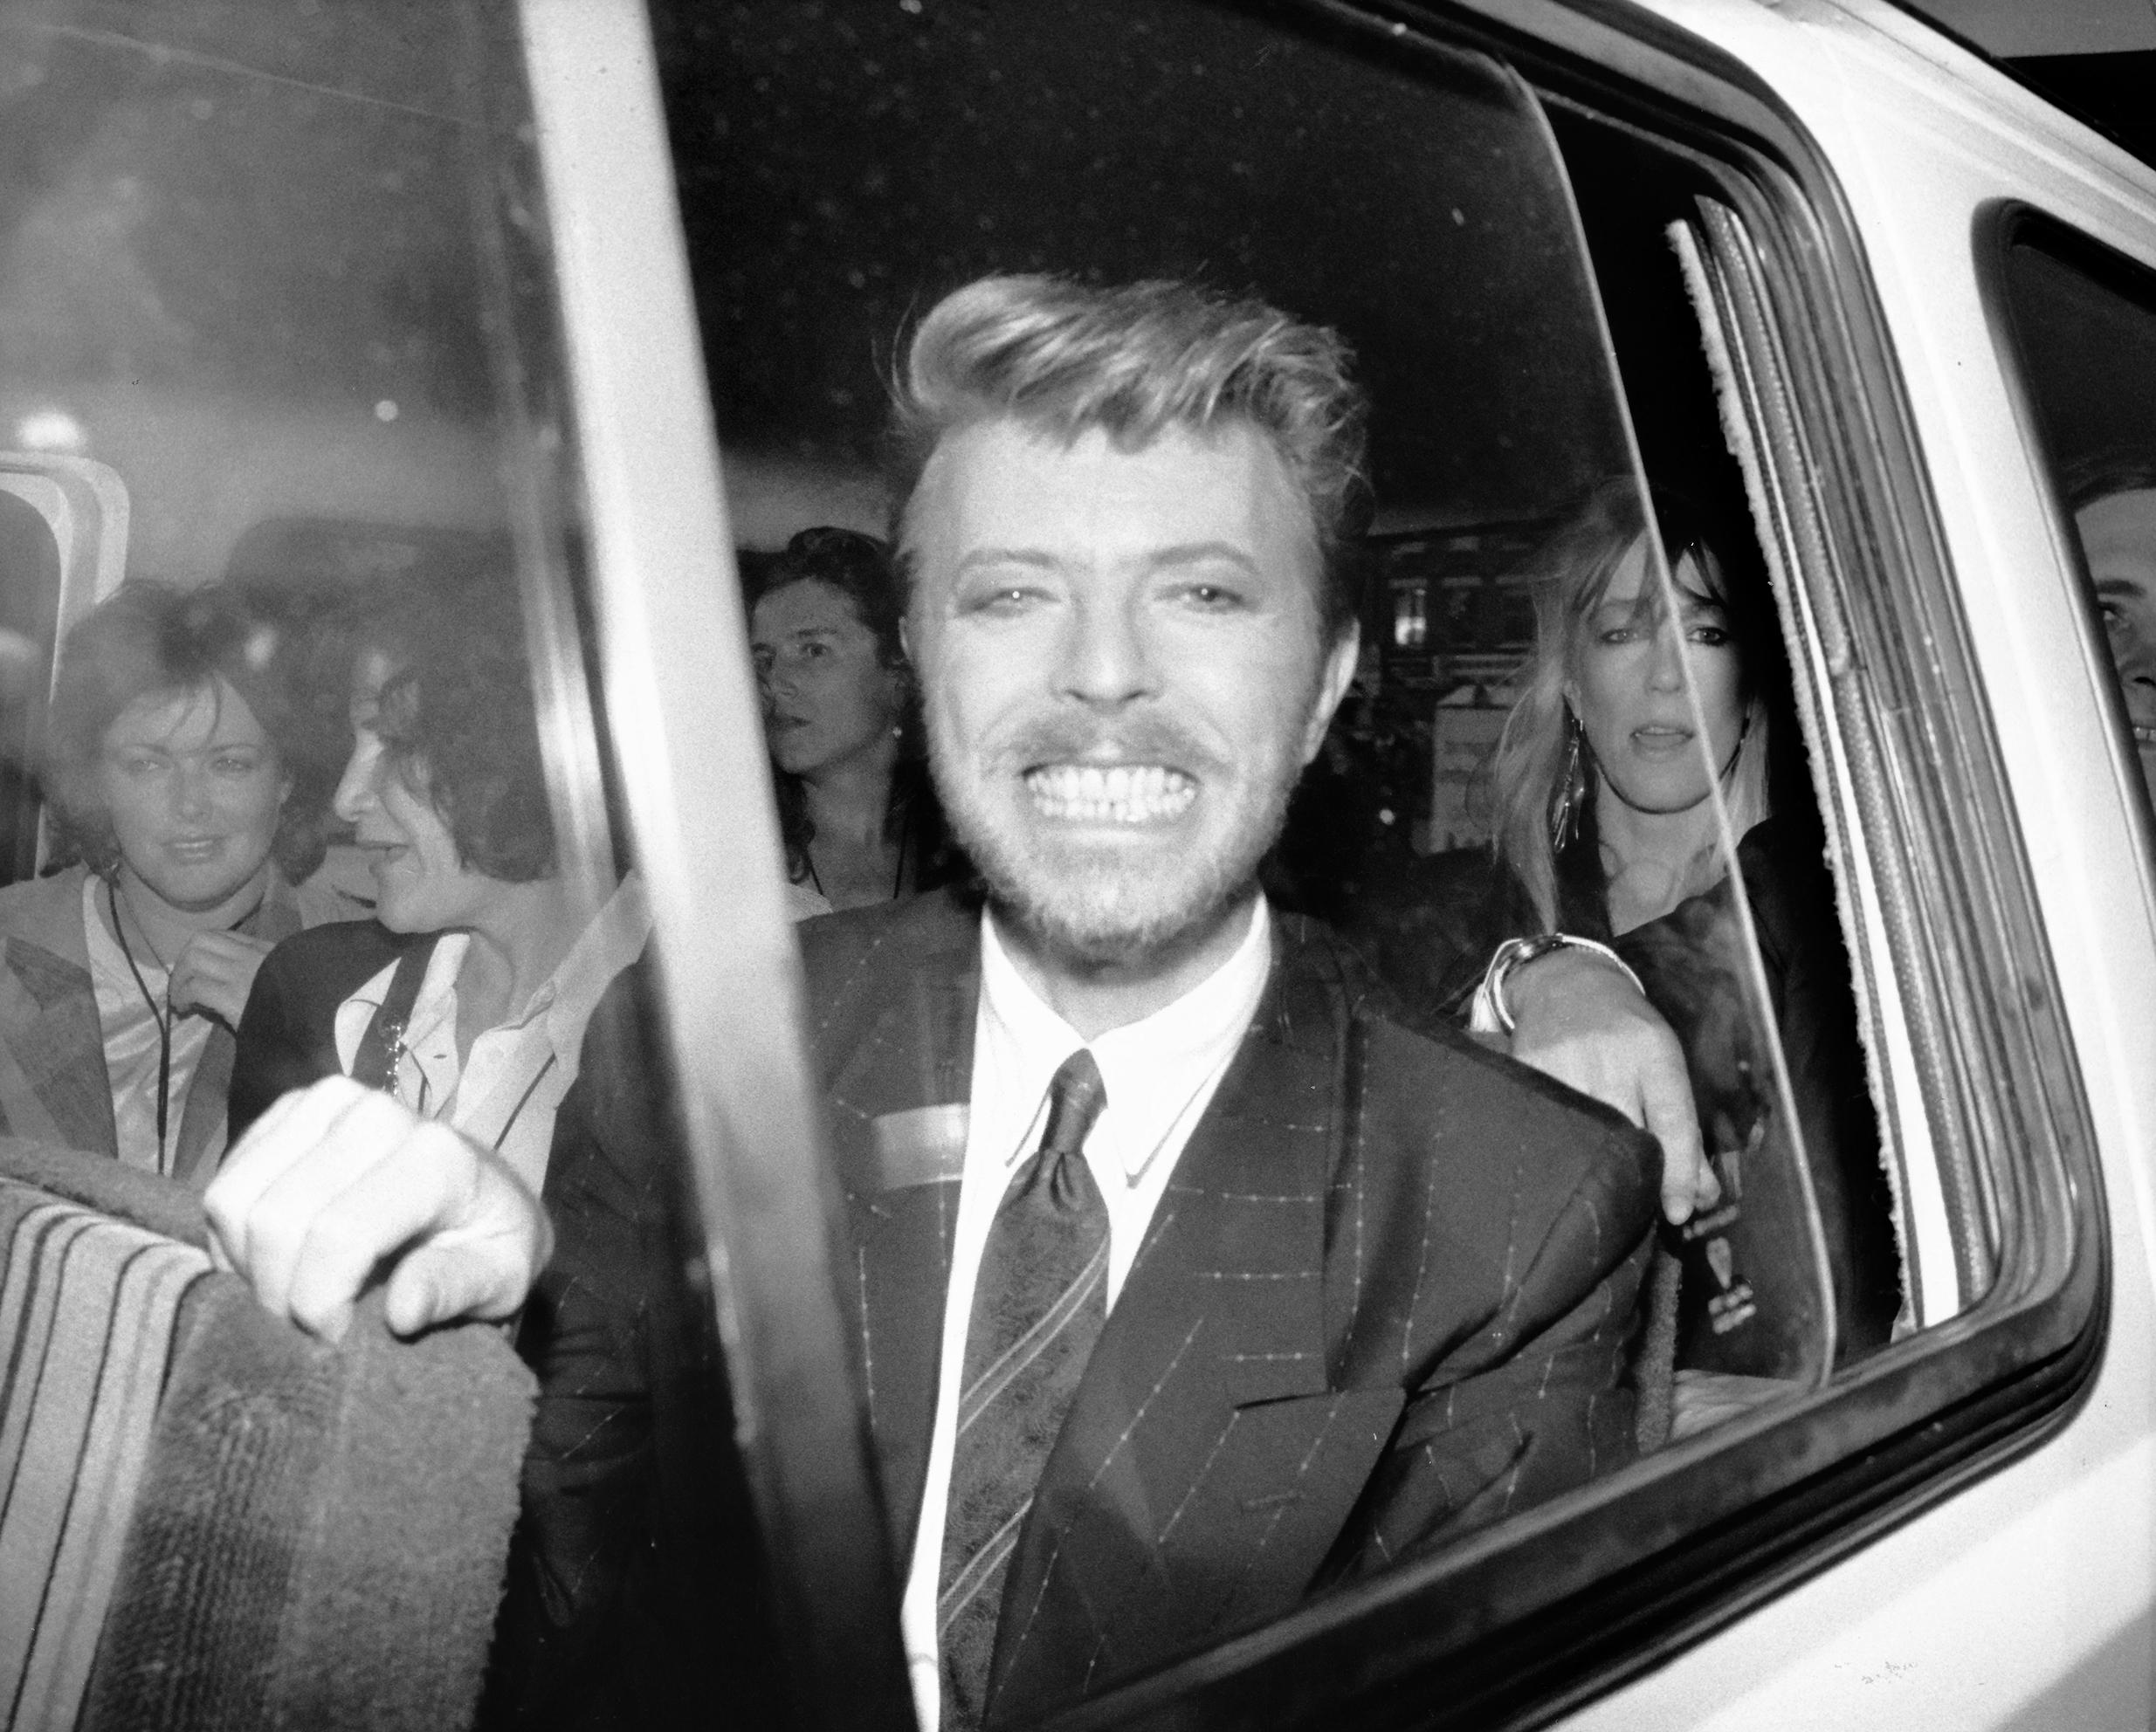 Alan Davidson Portrait Photograph - David Bowie: Big Smile in Car Window Globe Photos Fine Art Print